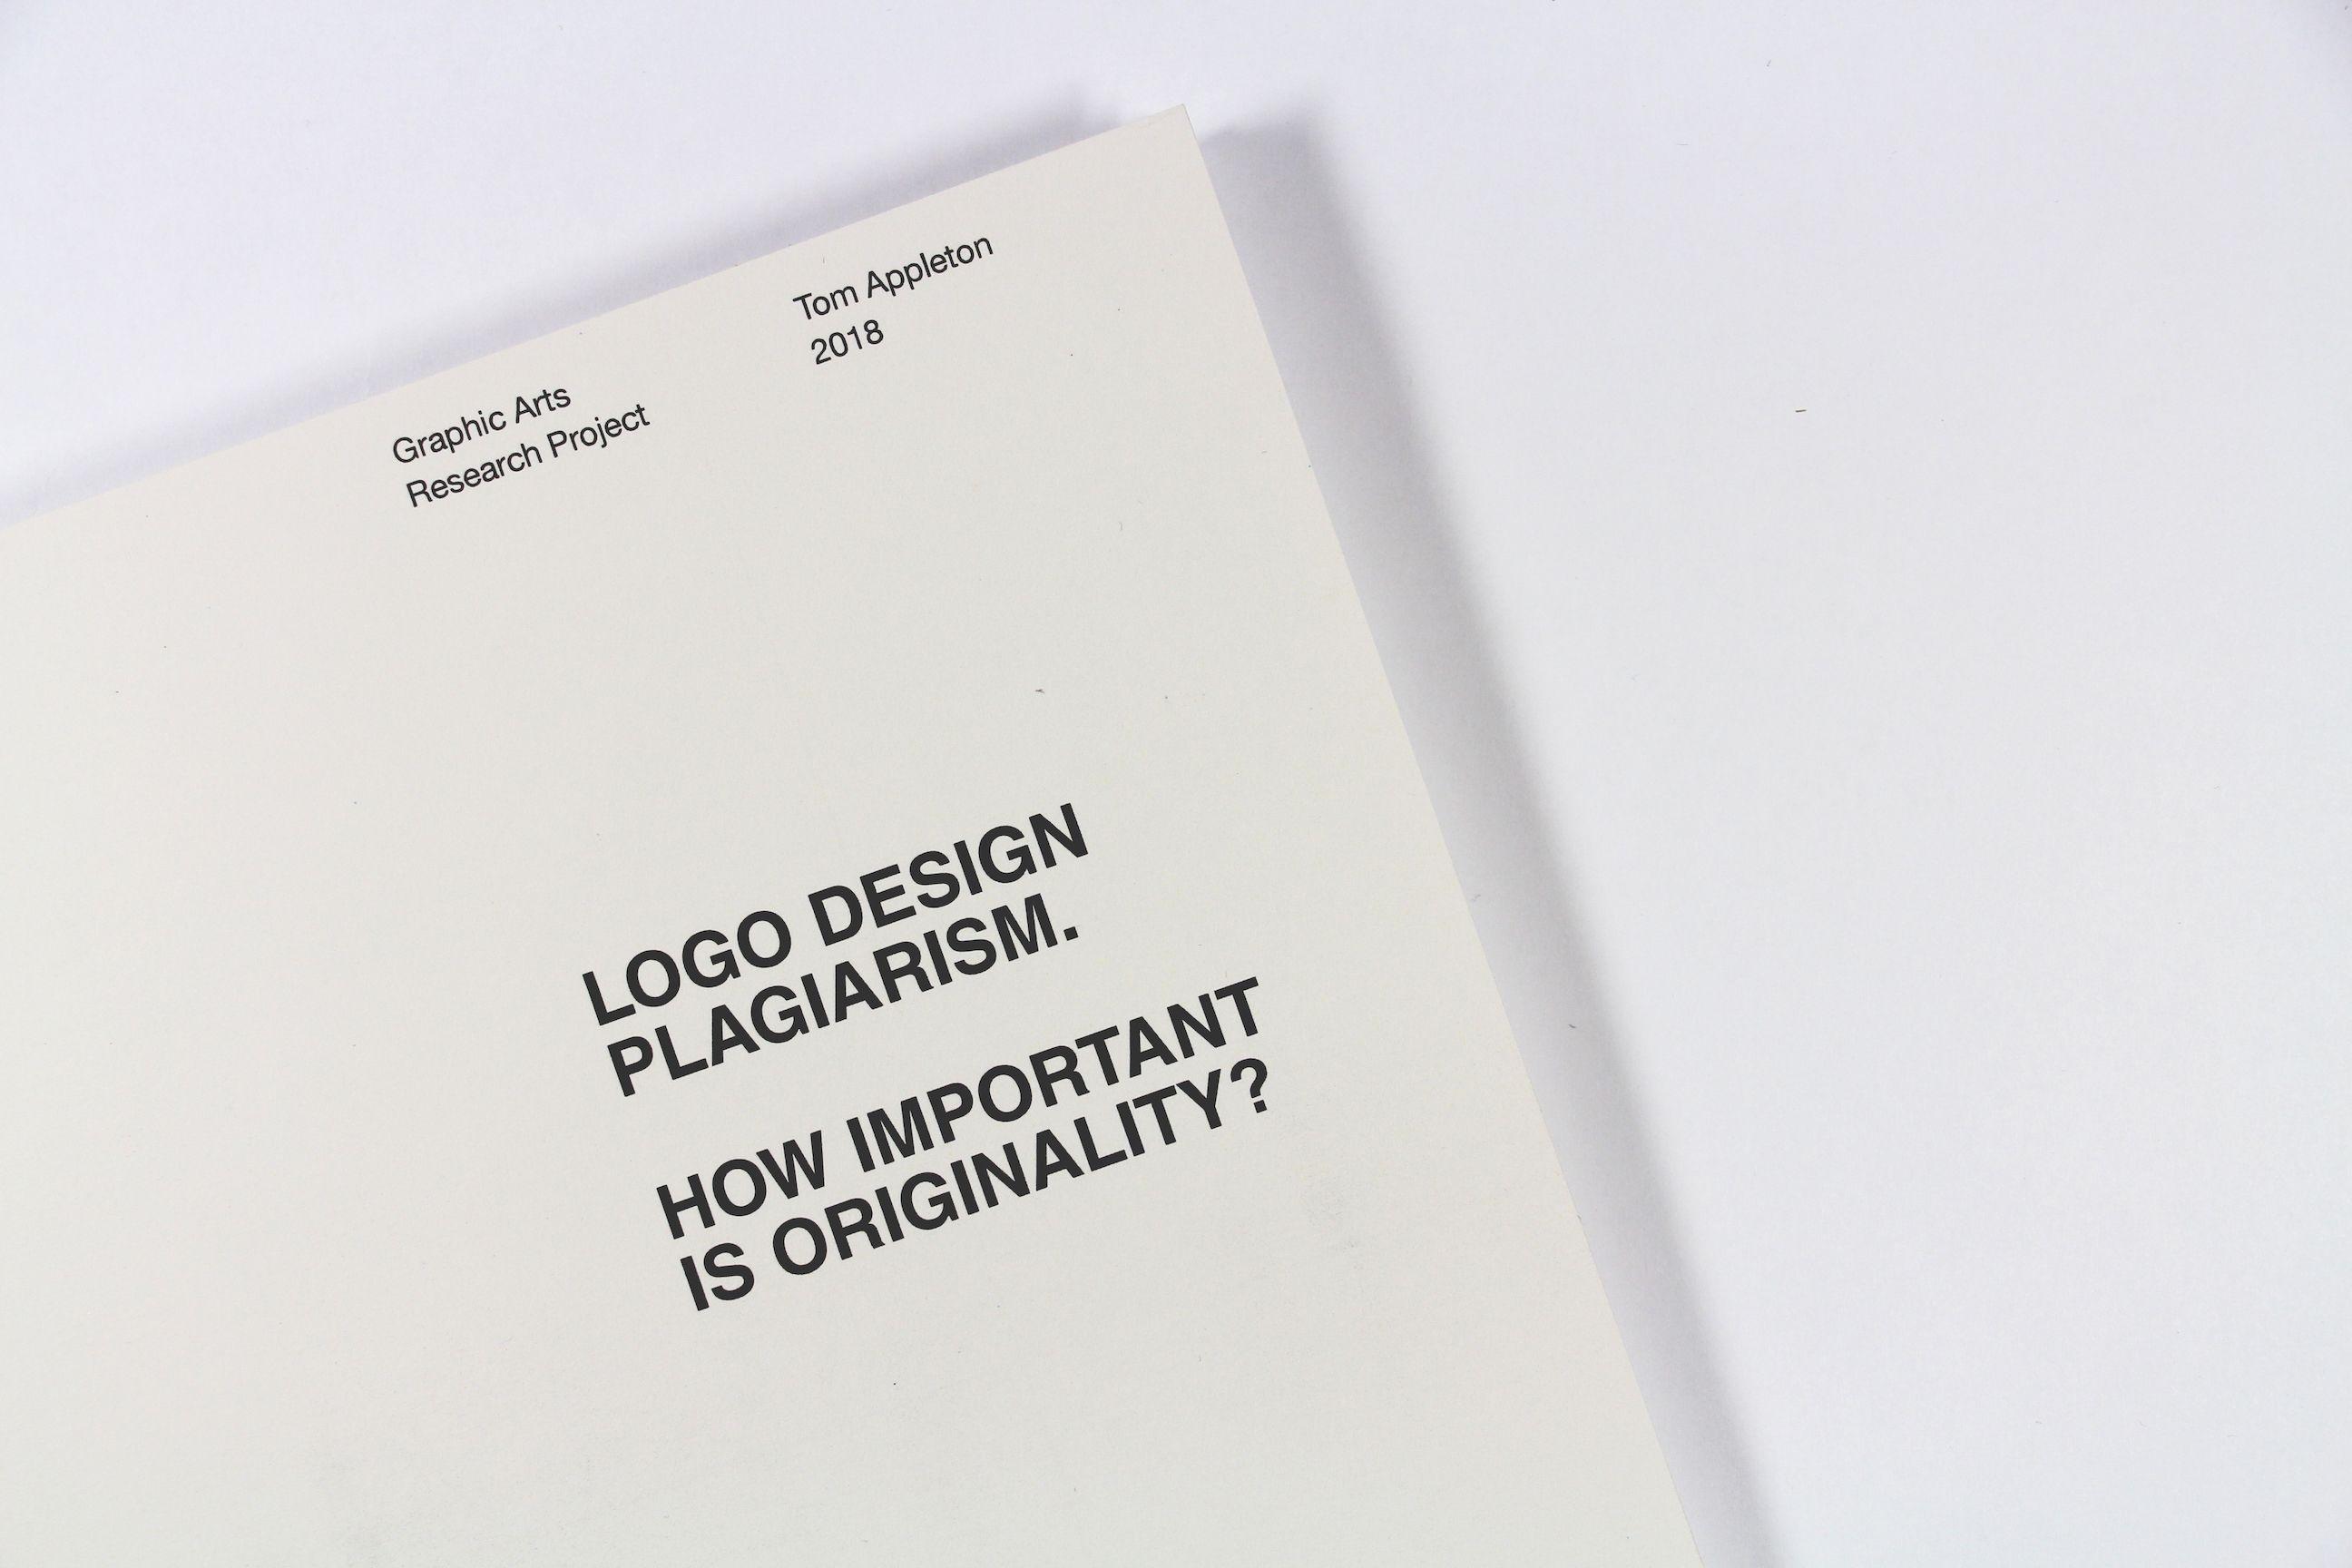 Important Logo - Logo Design Plagiarism. How important is originality? - Tom Appleton